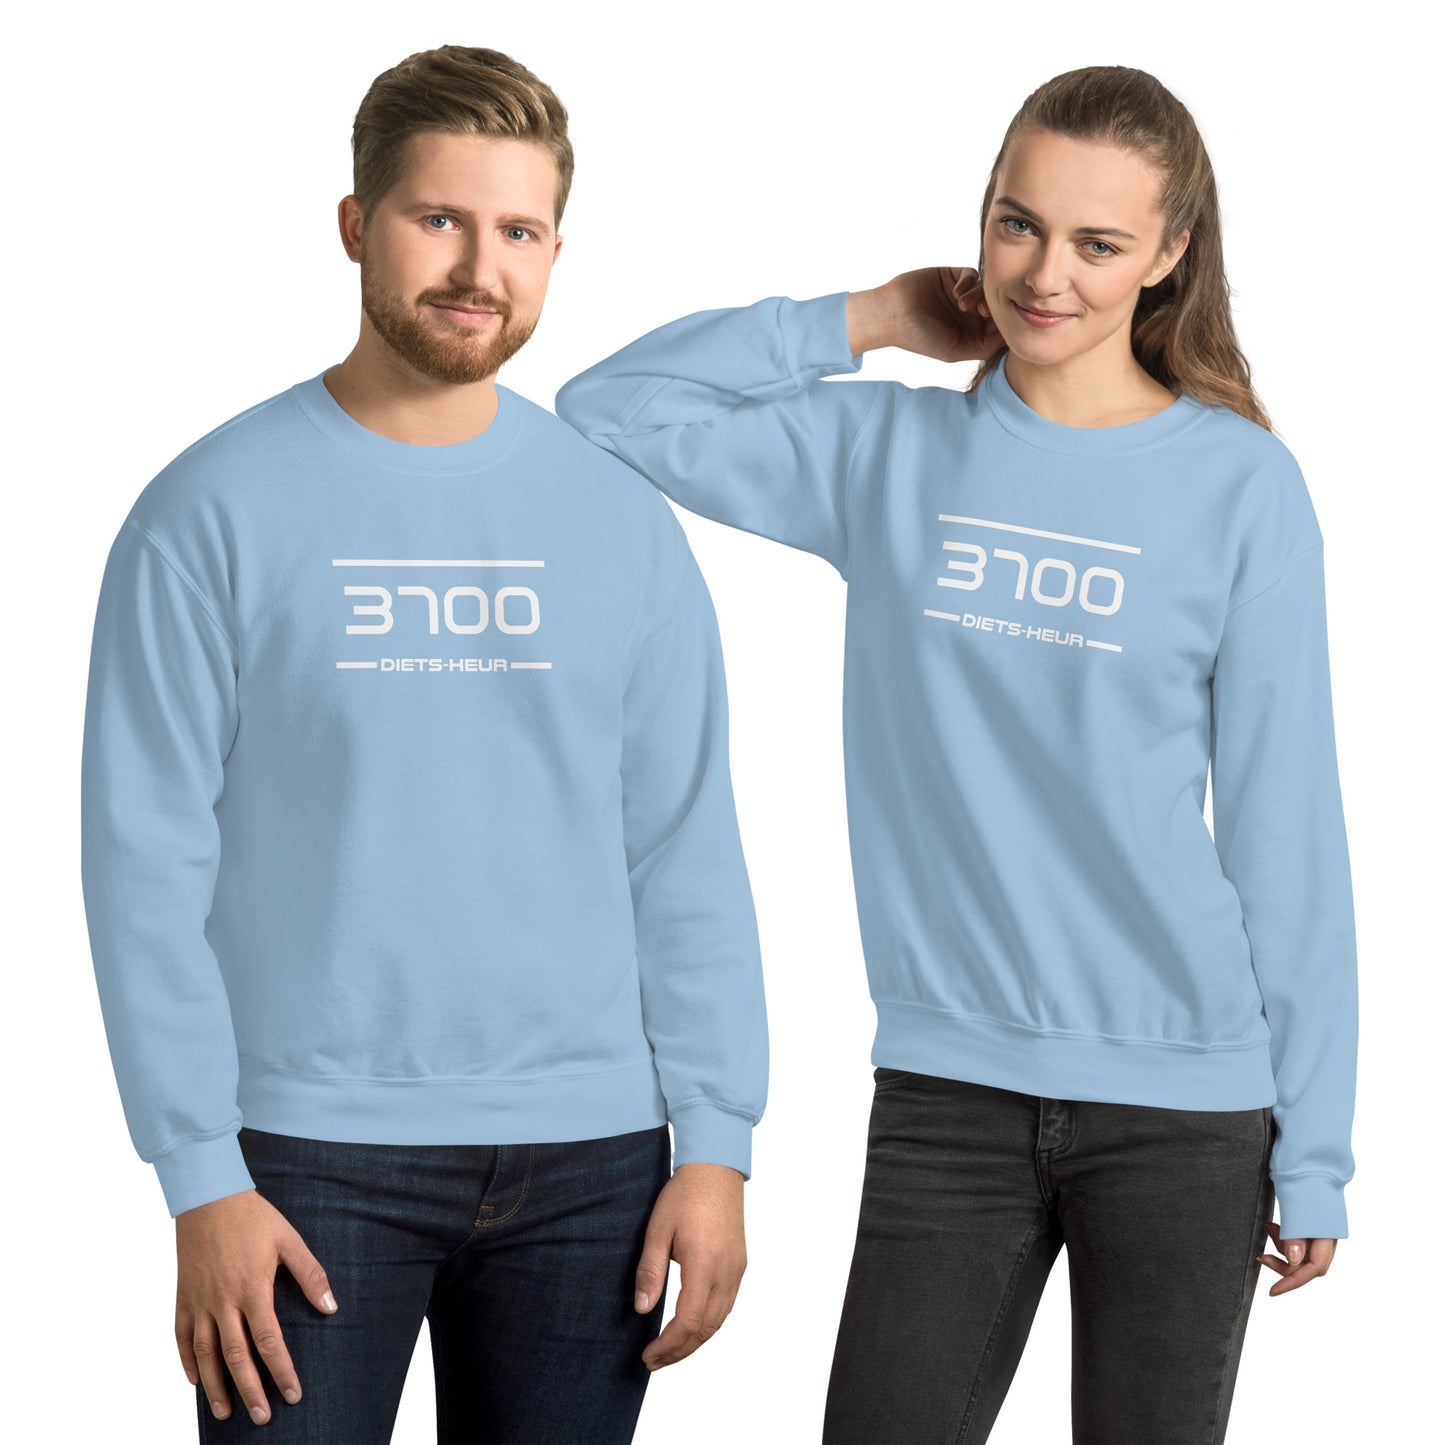 Sweater - 3700 - Diets-Heur (M/V)